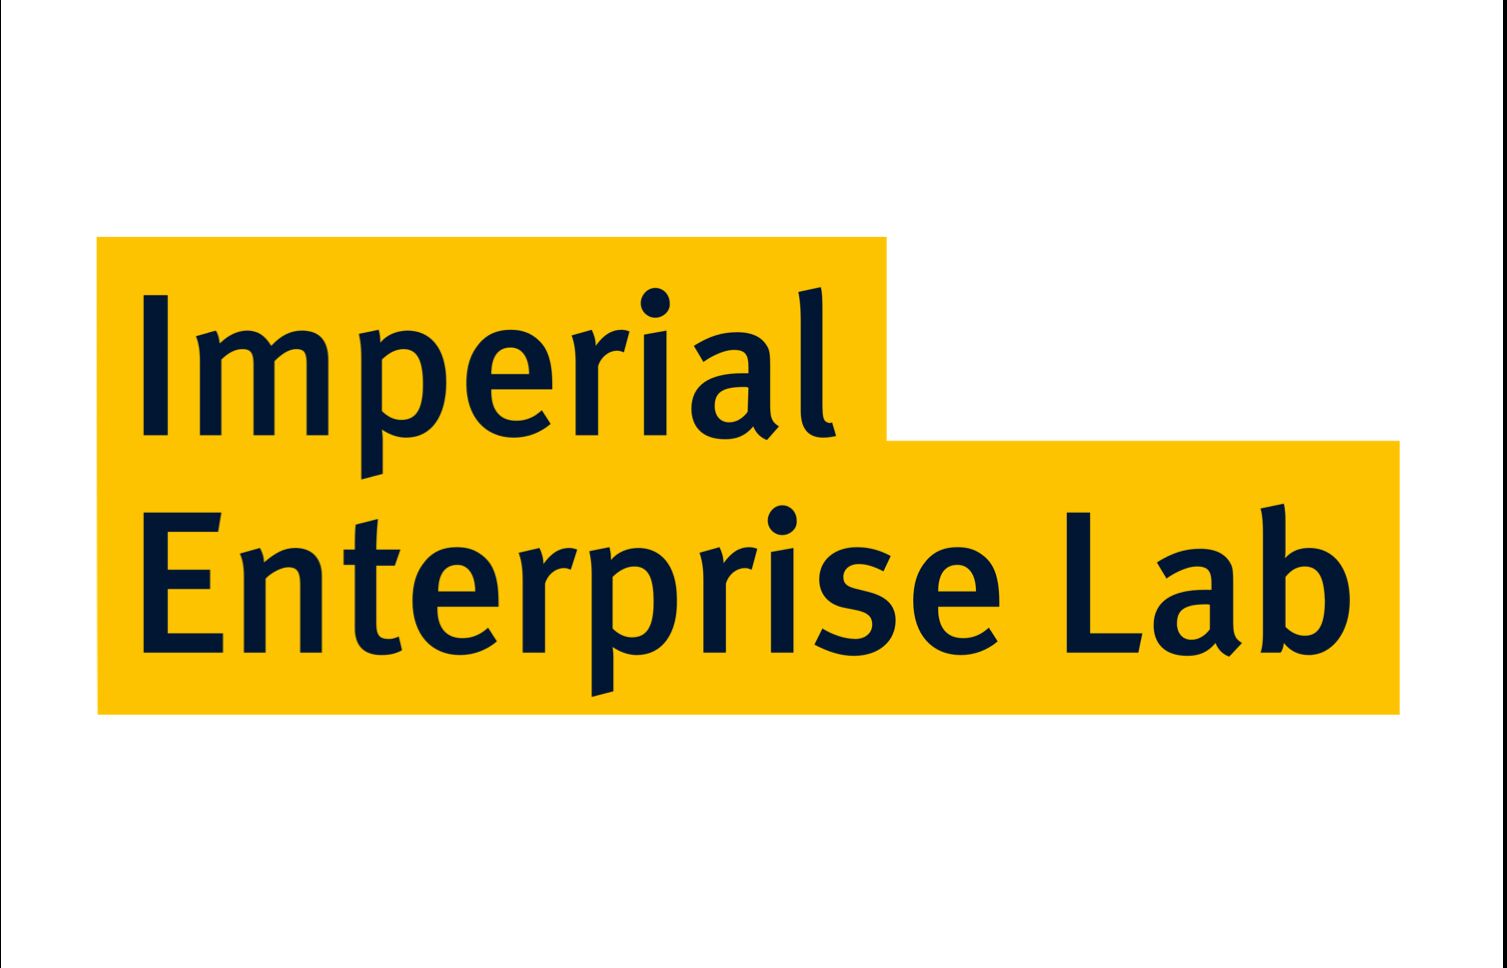 Imperial enterprise lab